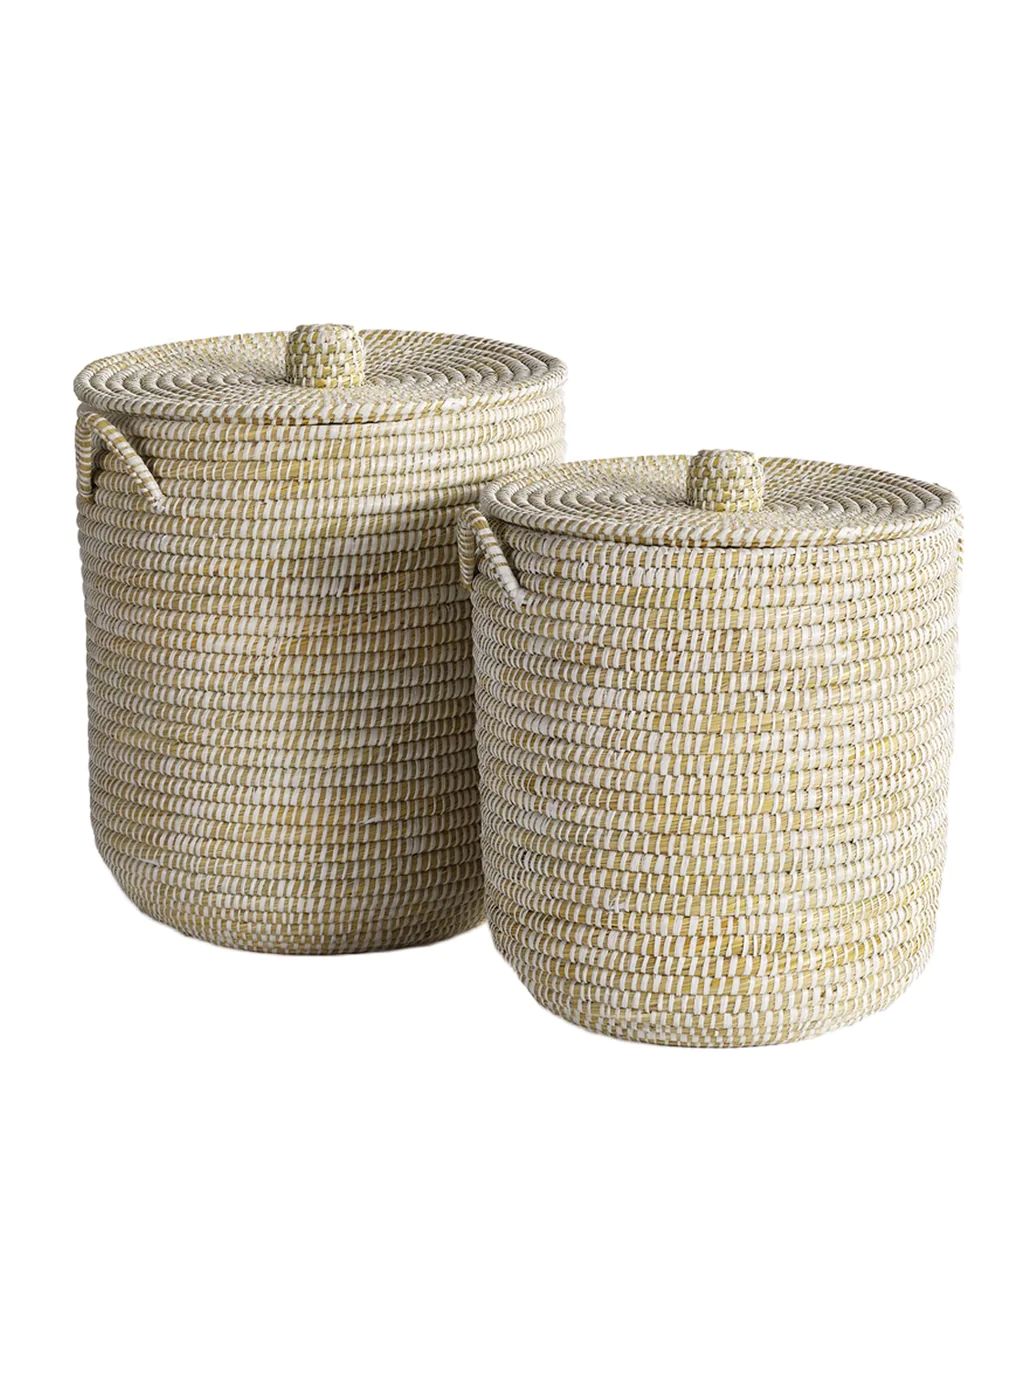 Solomon Lidded Baskets, Set of 2 | House of Jade Home